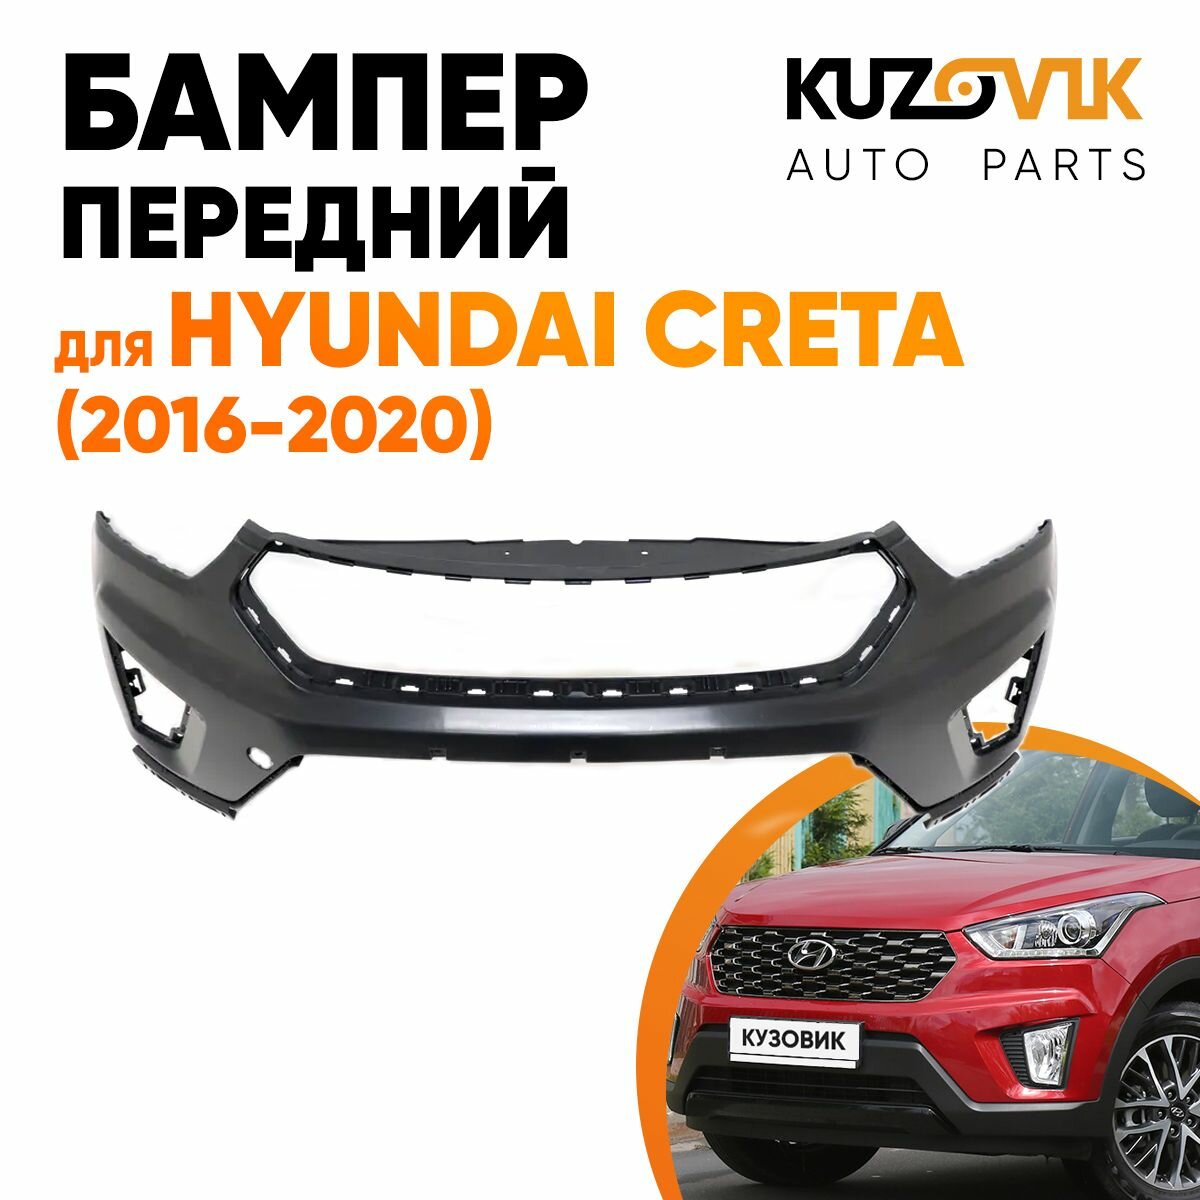 Бампер передний для Хендай Крета Hyundai Creta (2016-2020) верхняя часть